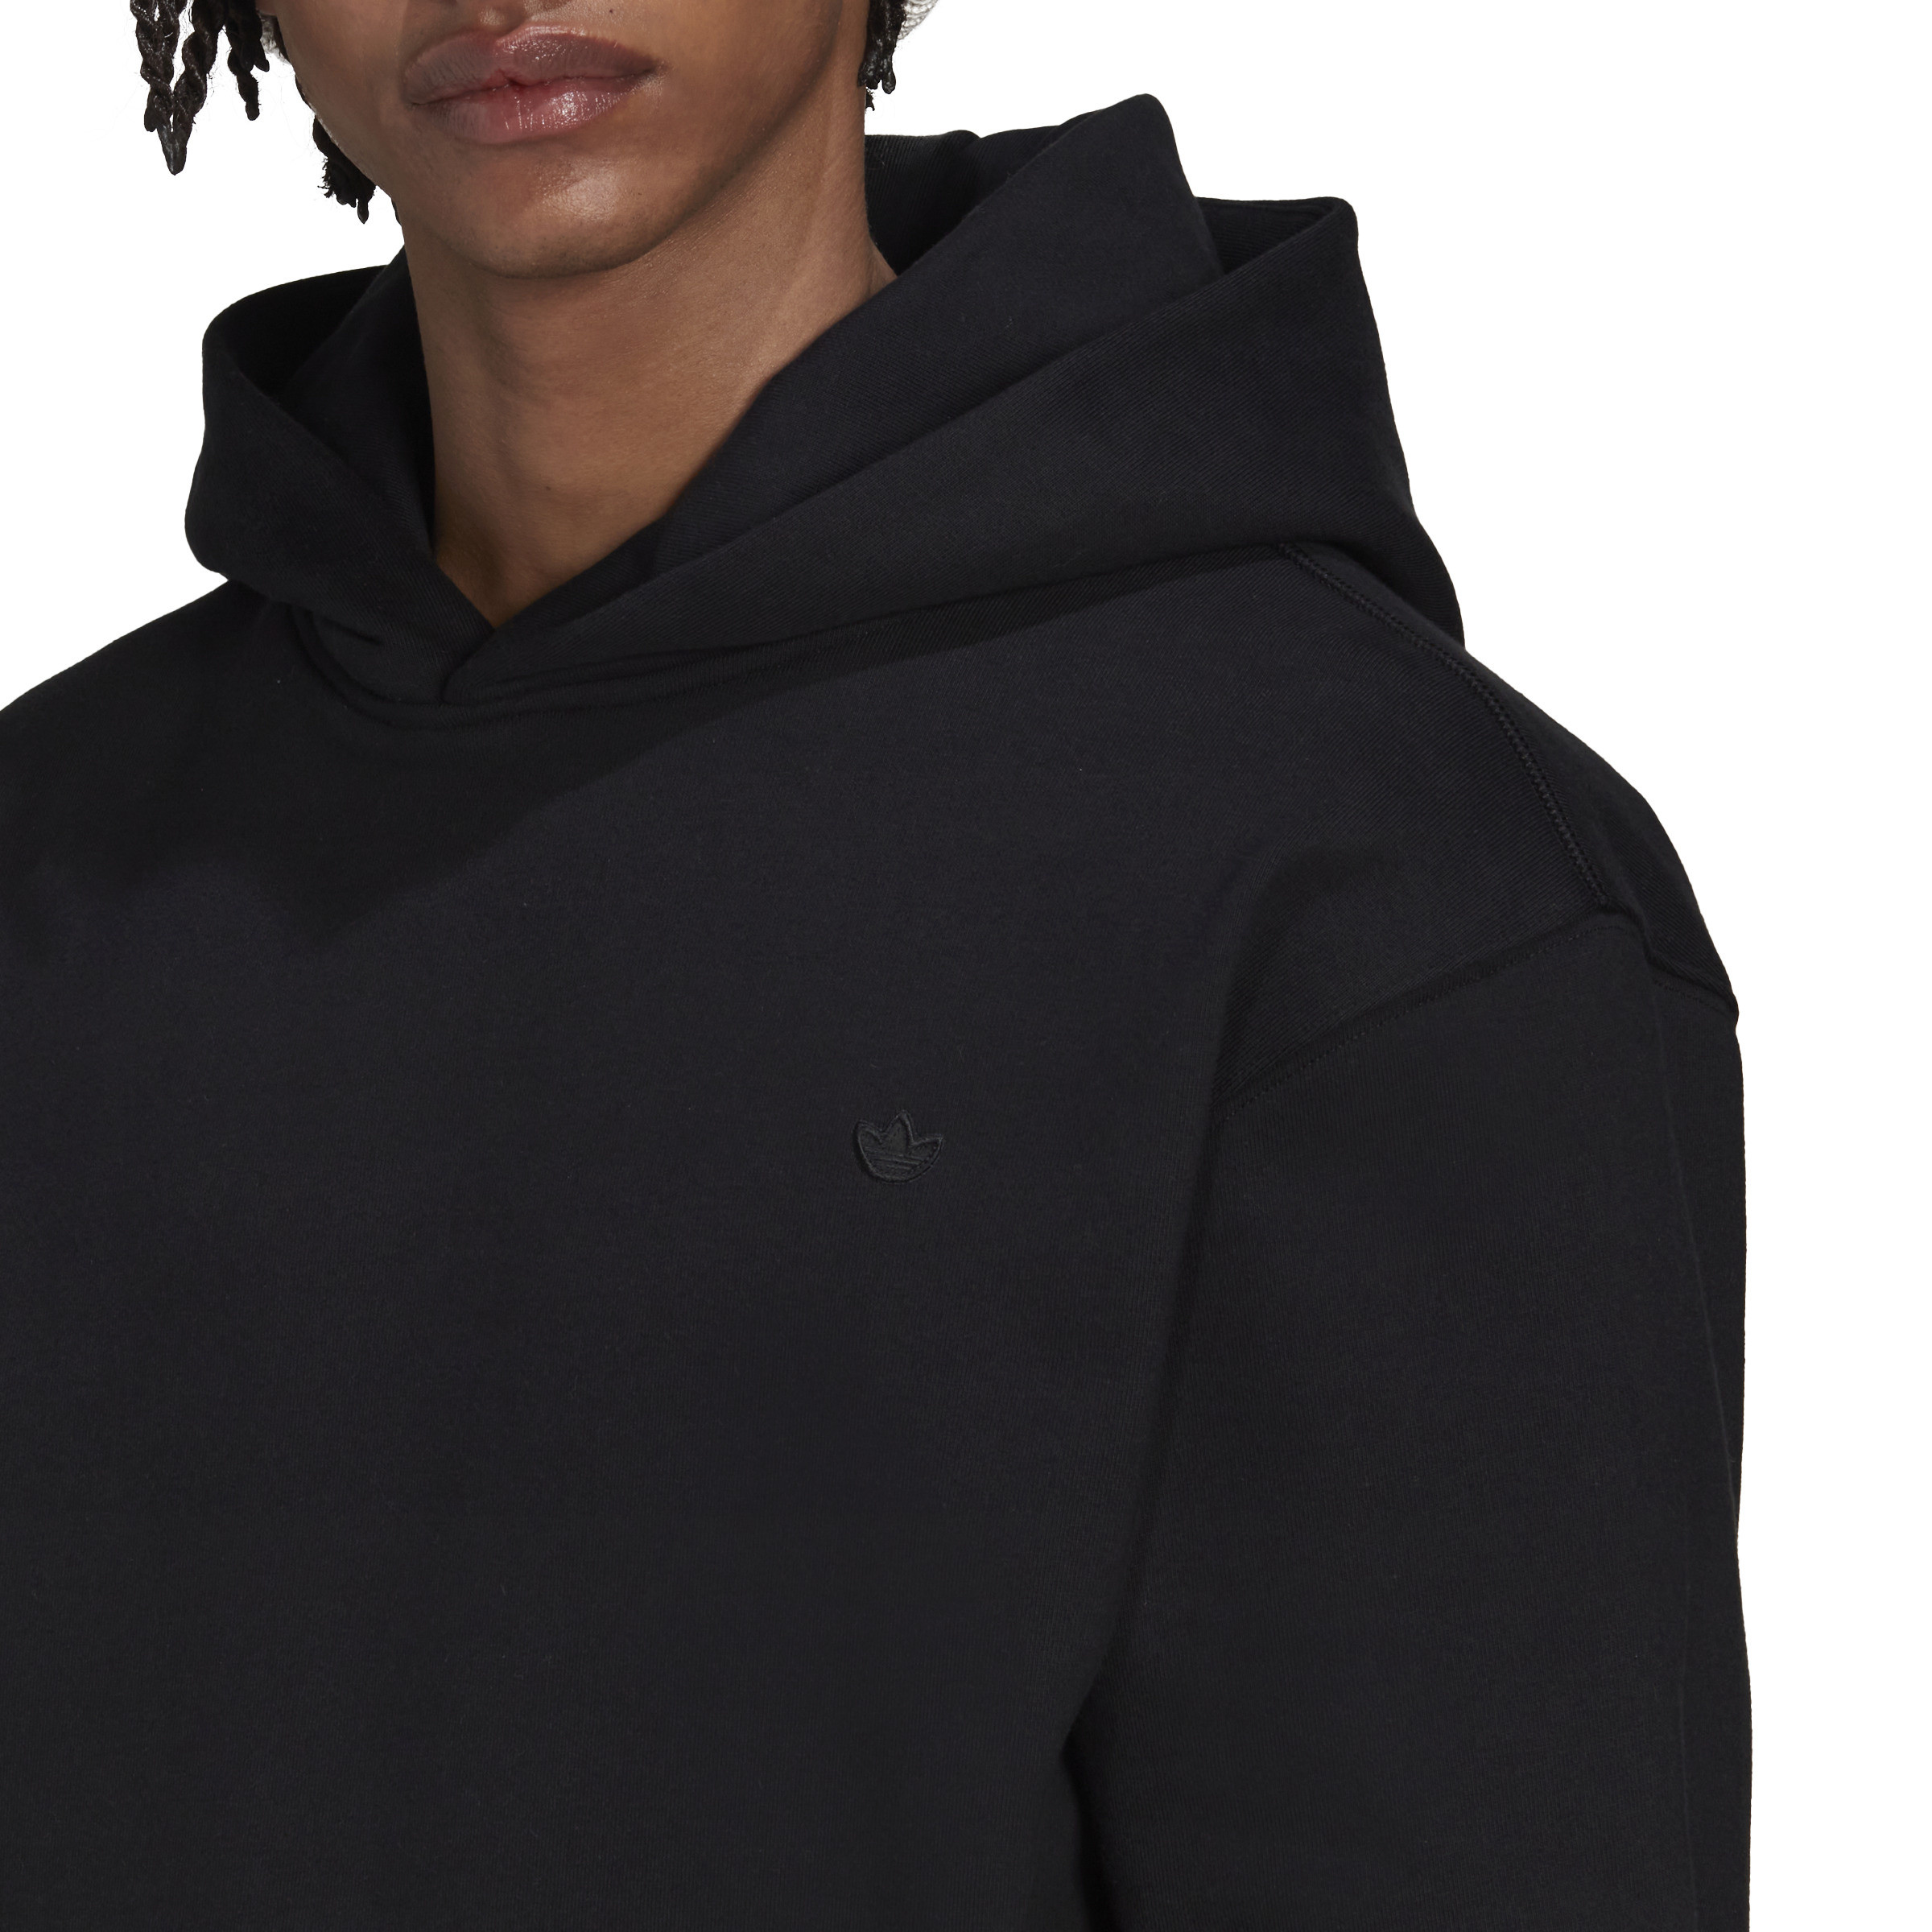 Adidas - Hooded sweatshirt adicolor, Black, large image number 2